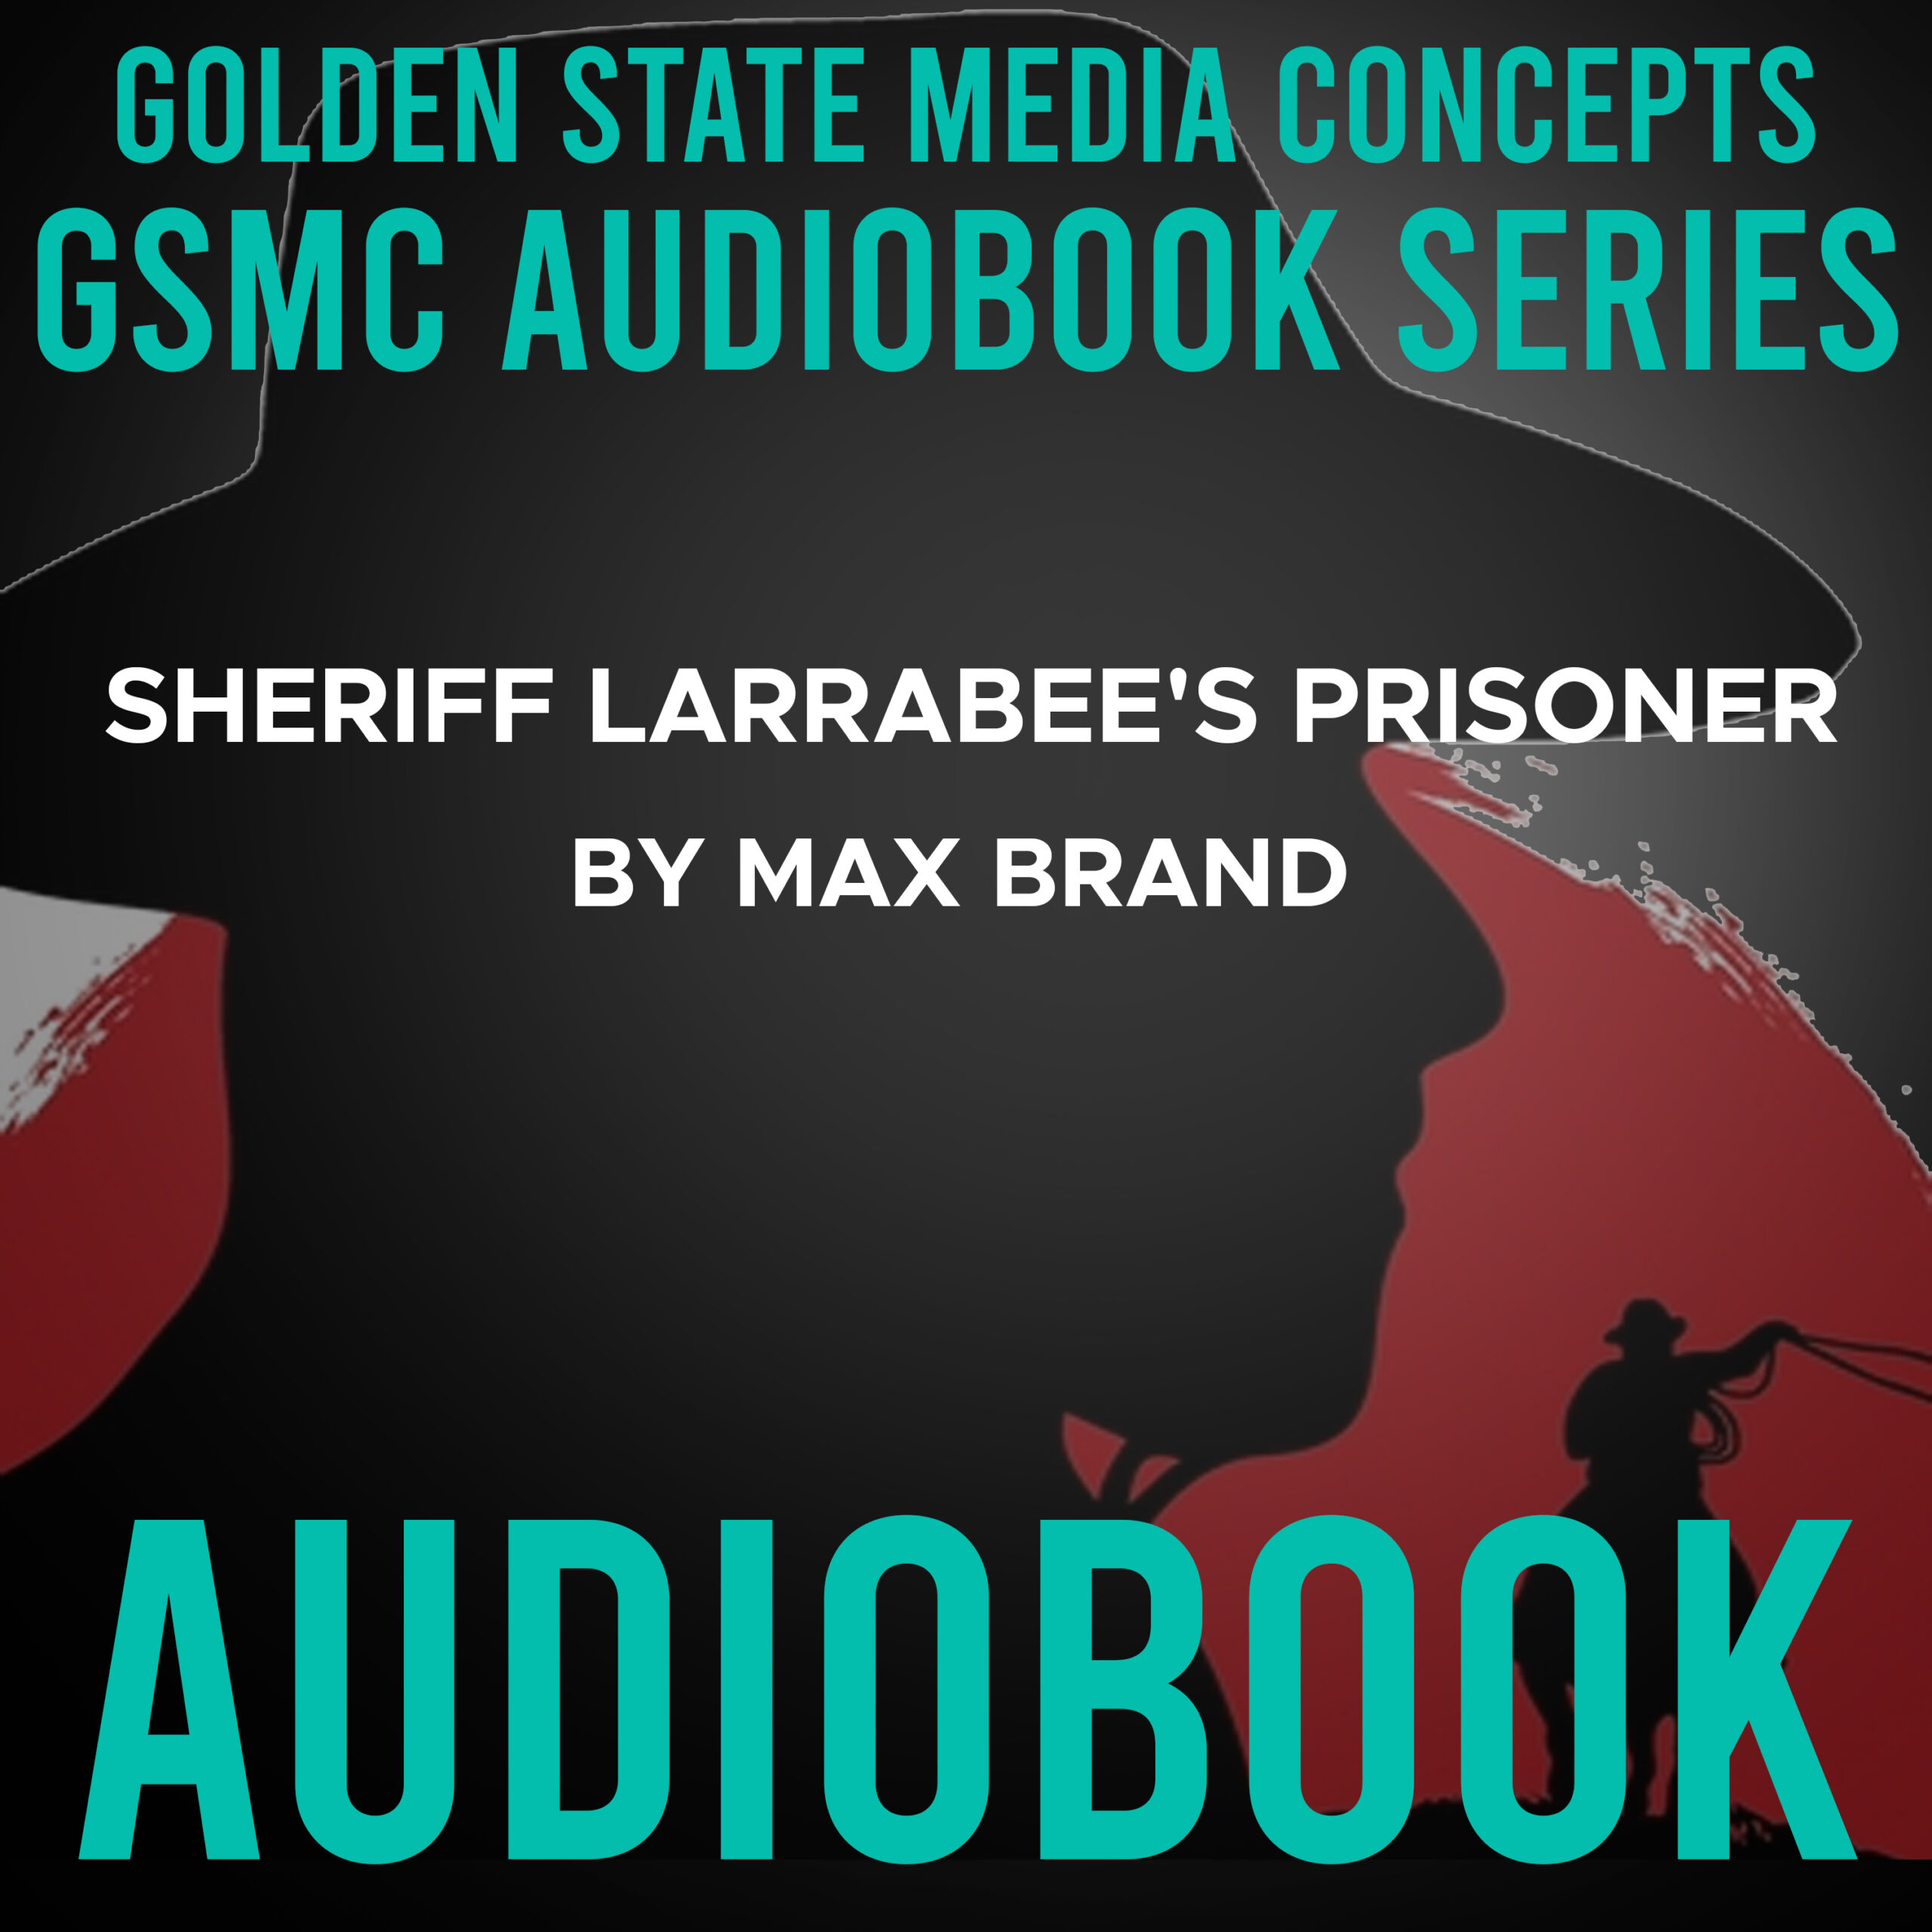 GSMC Audiobook Series: Sheriff Larrabee's Prisoner by Max Brand